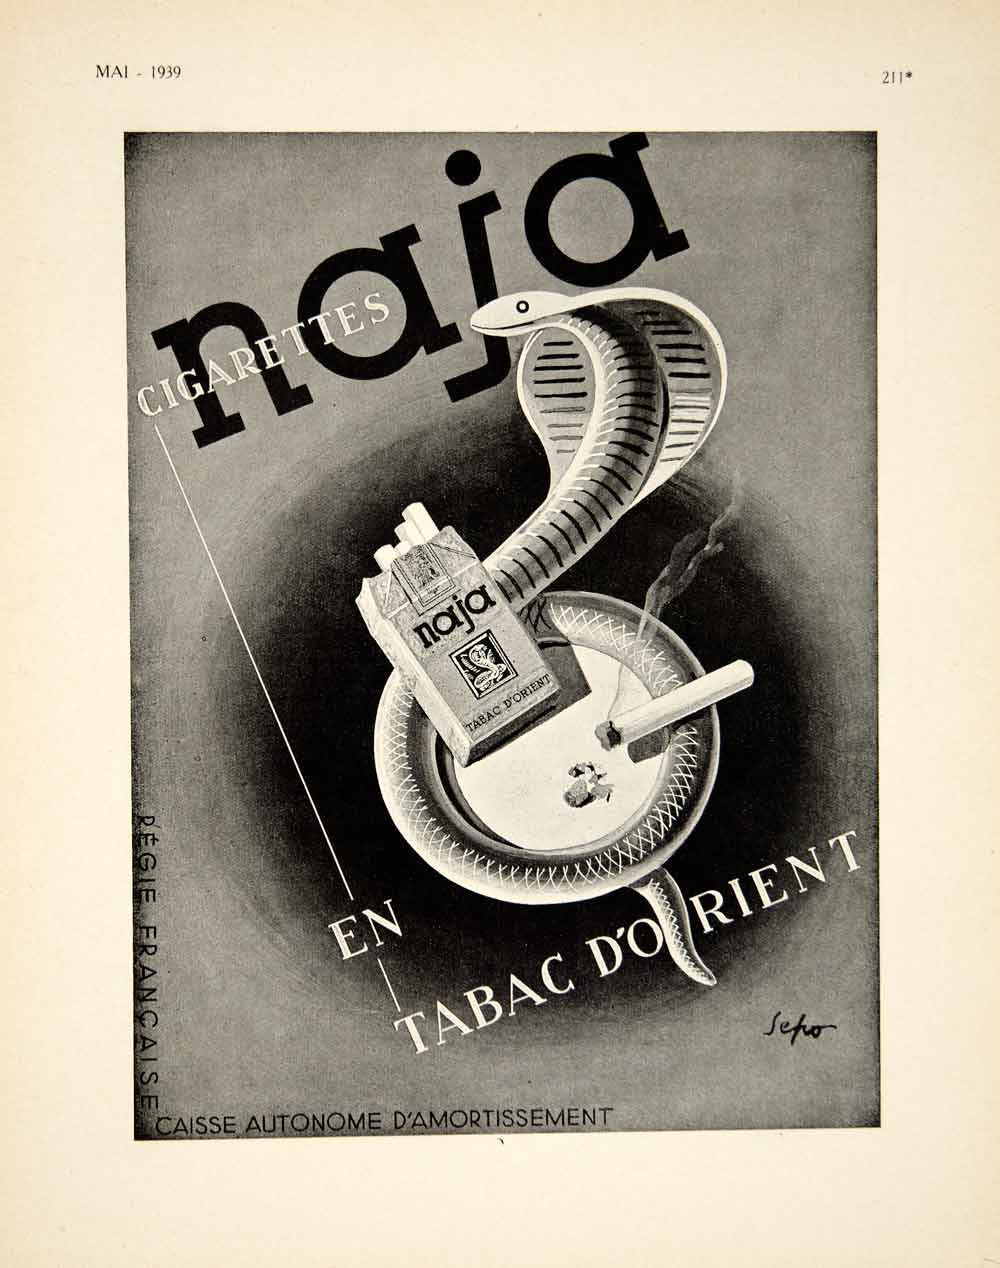 1939 Ad French Naja Cigarettes Tabc d'Orient Cobra Snake Smoking Sepo VEN9 - Period Paper
